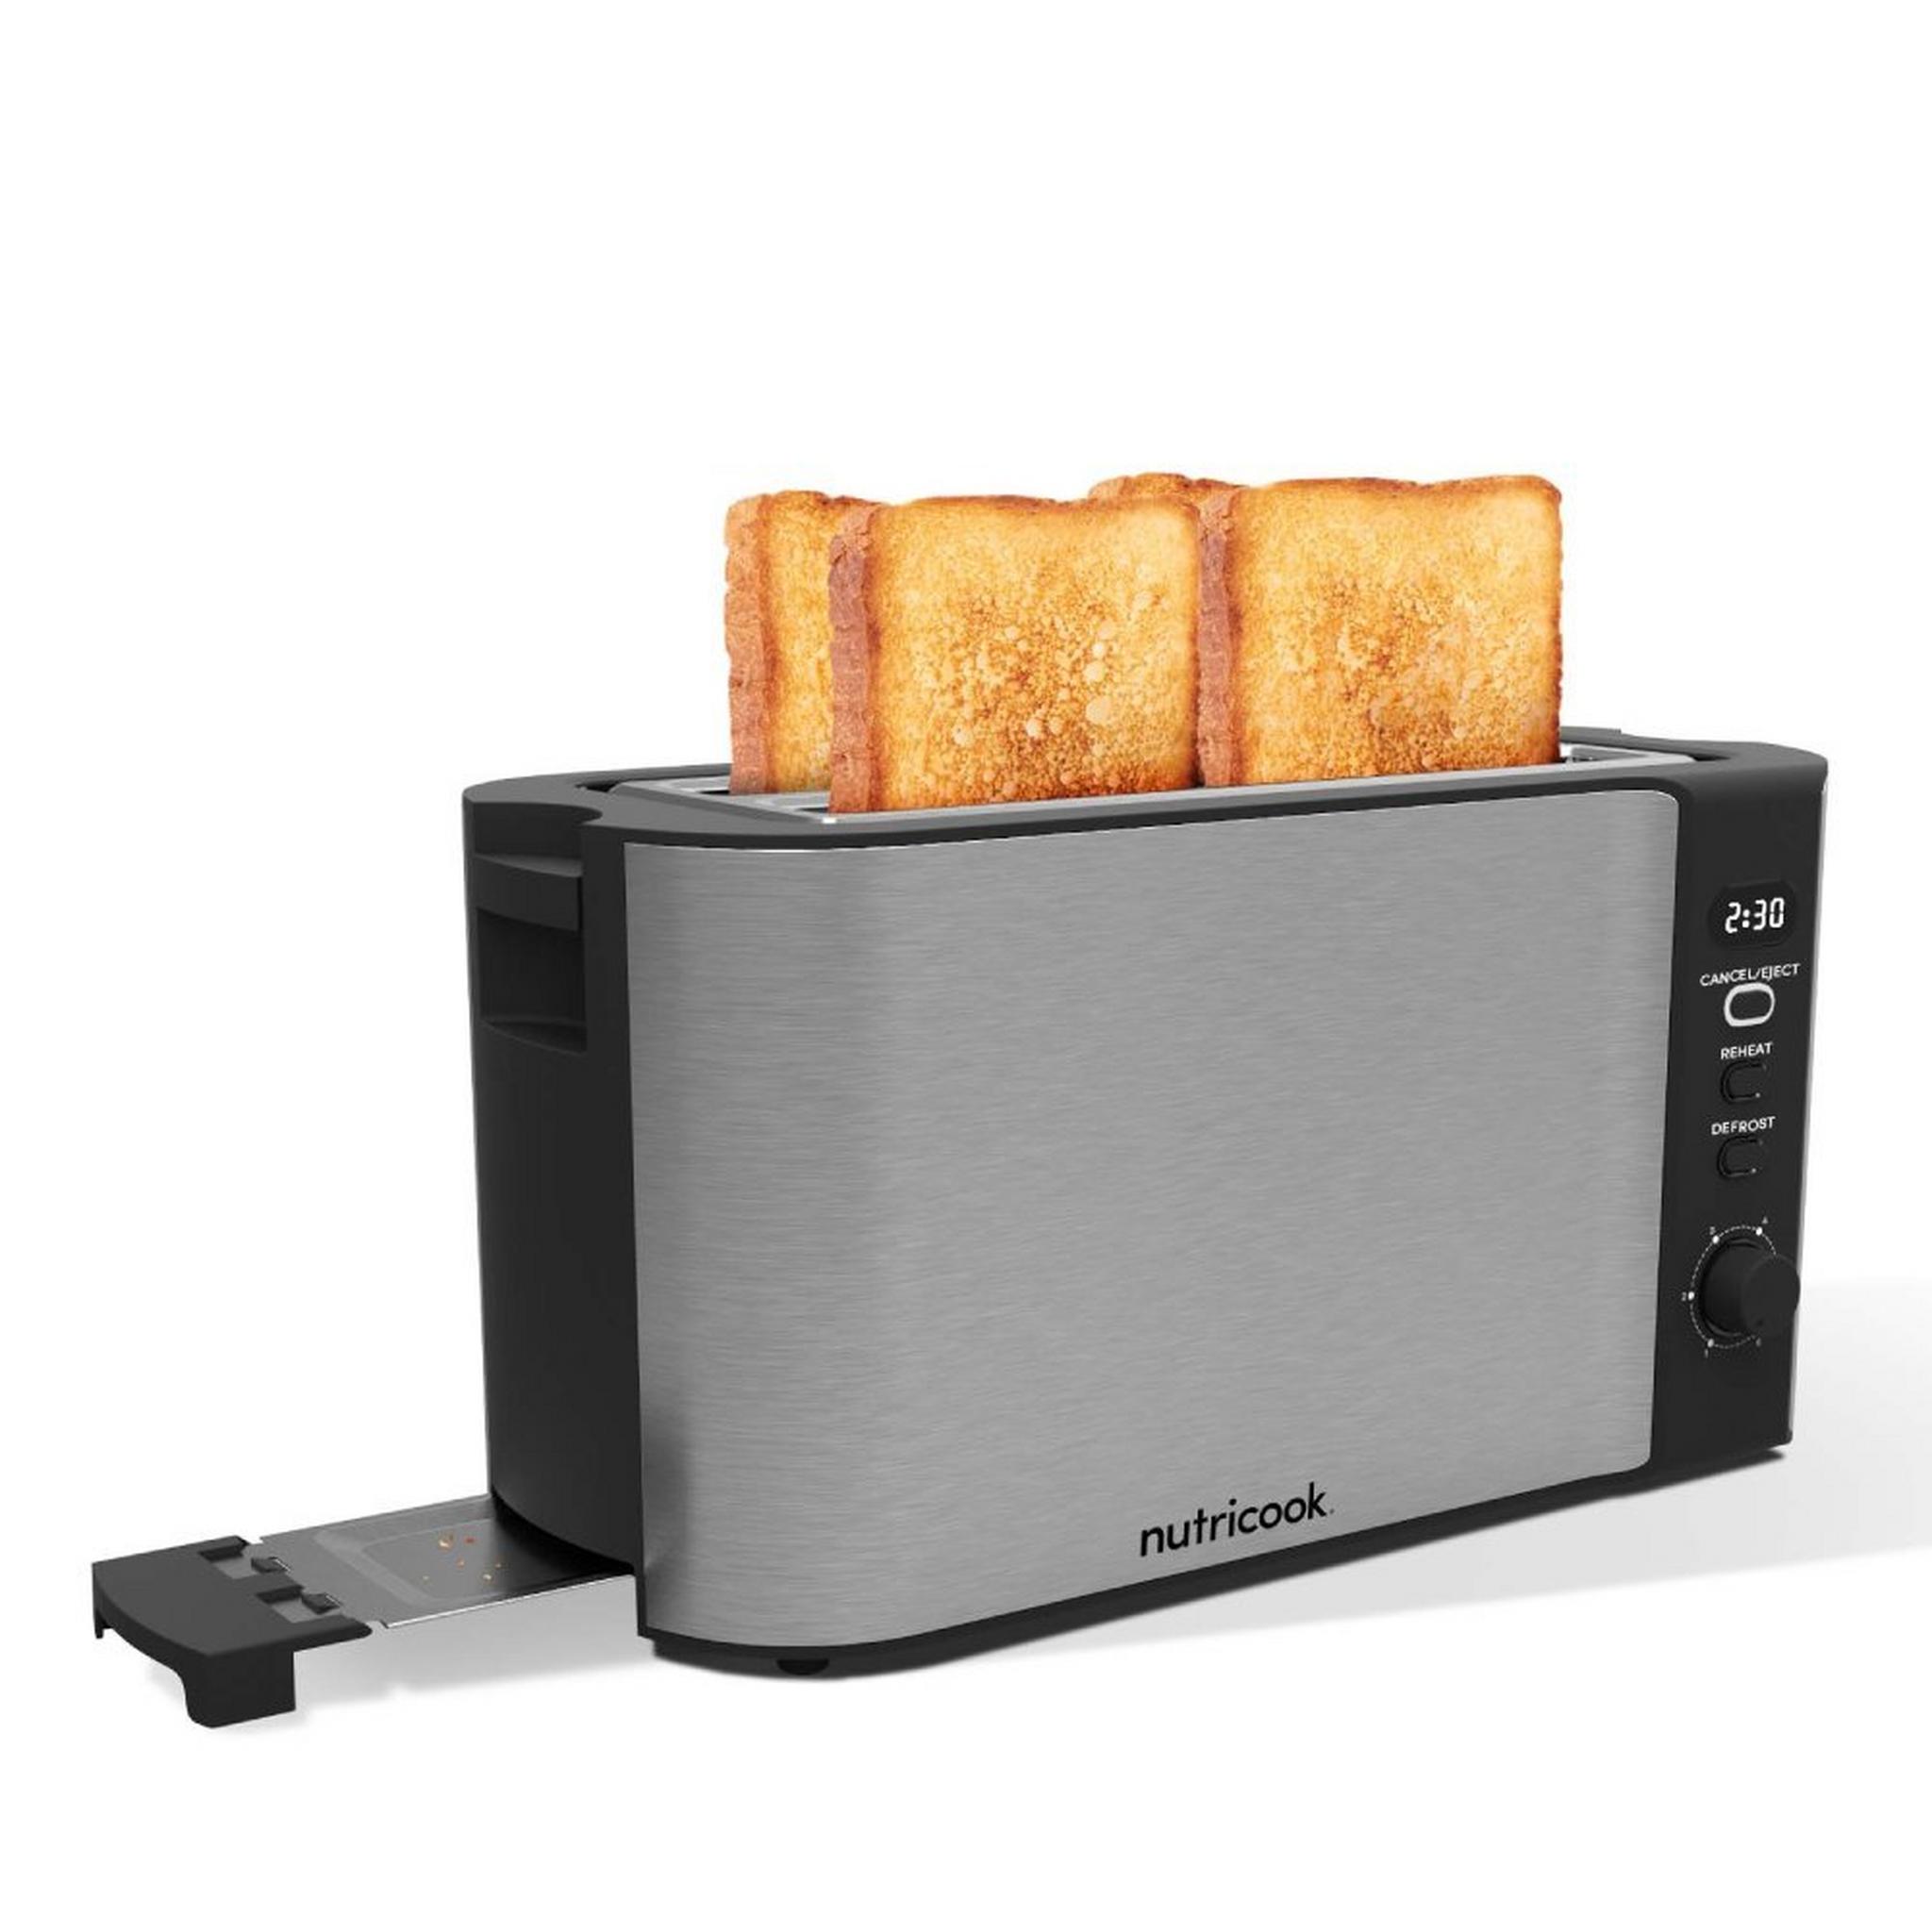 Nutricook 4 Slice Digital Toaster 1800W NC-T104S